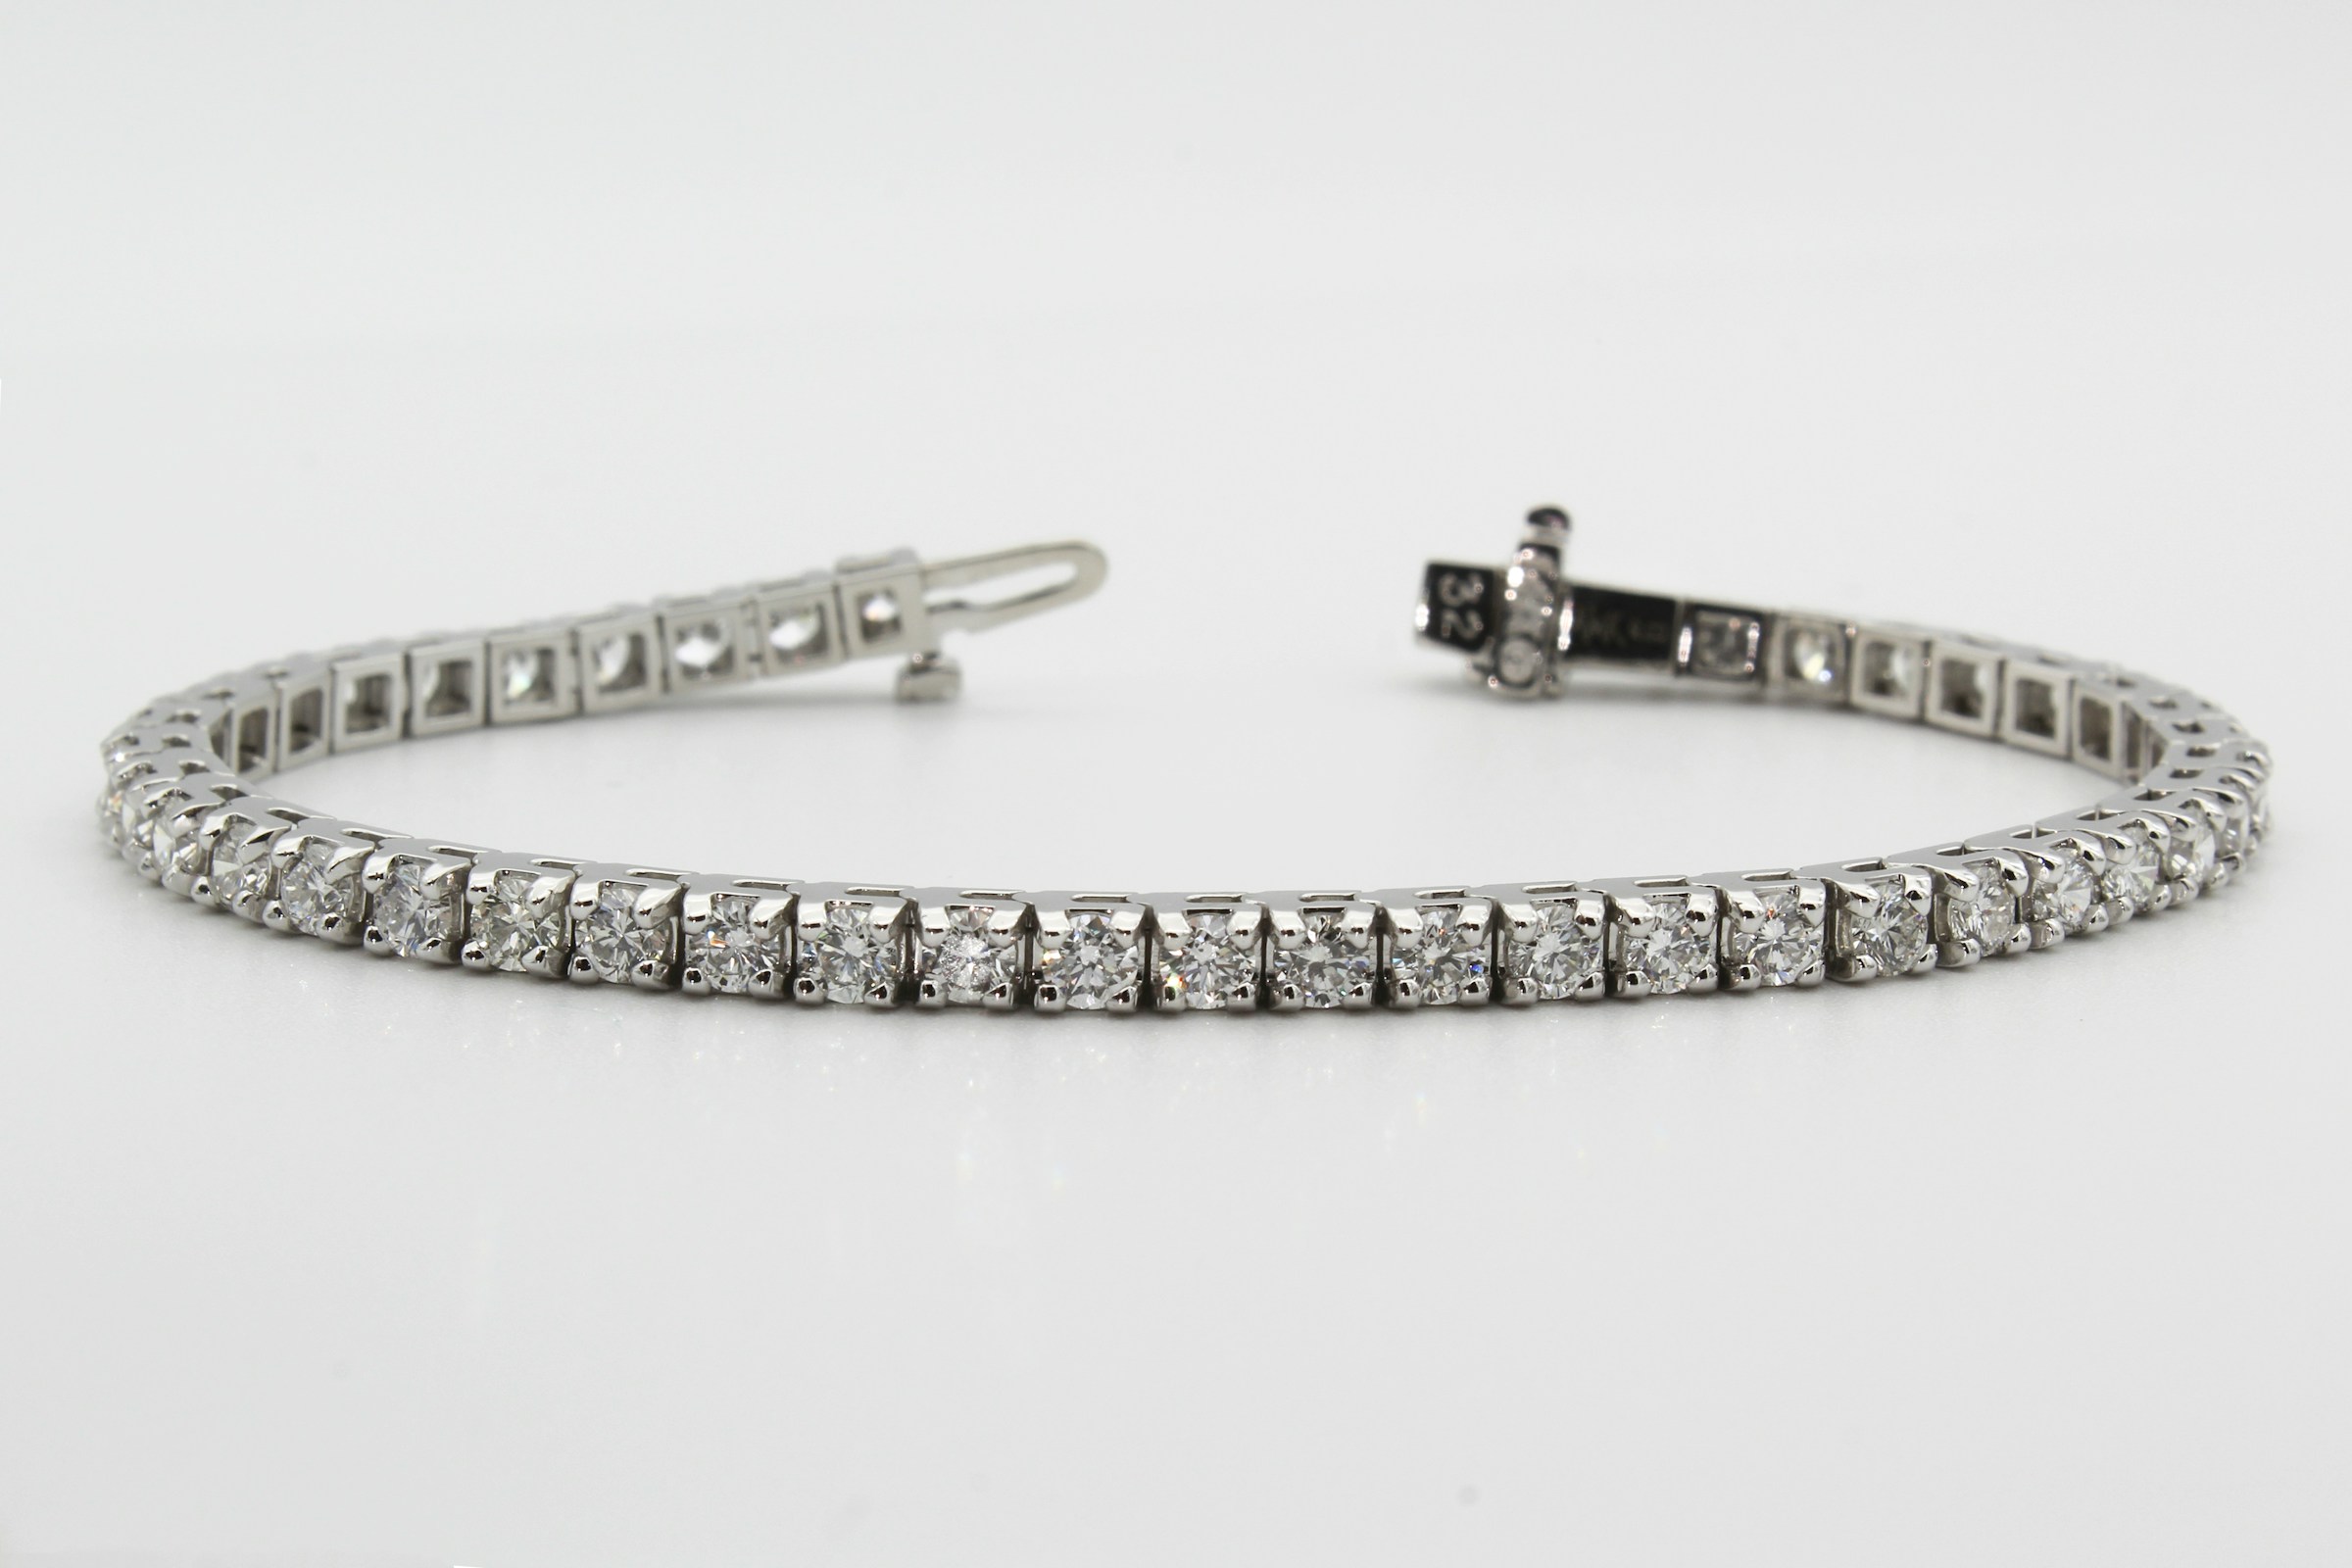 A gold and silver link bracelet | Source: Unsplash